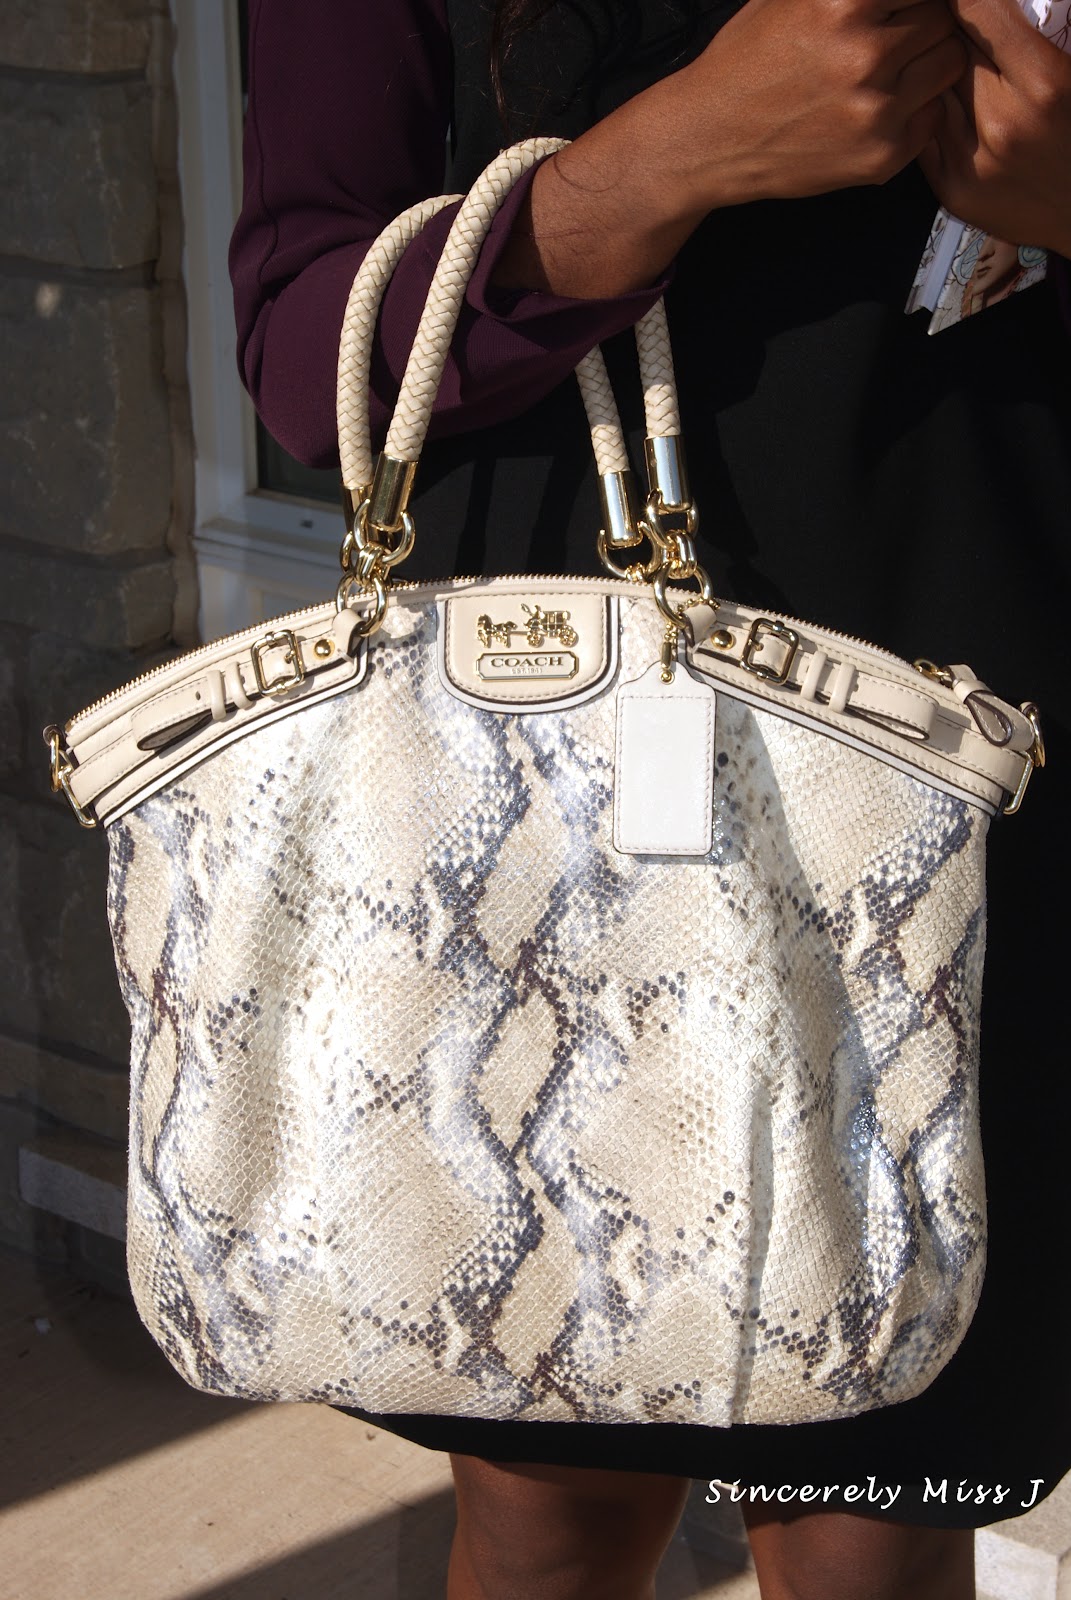 Coach handbag with snake-skin pattern 